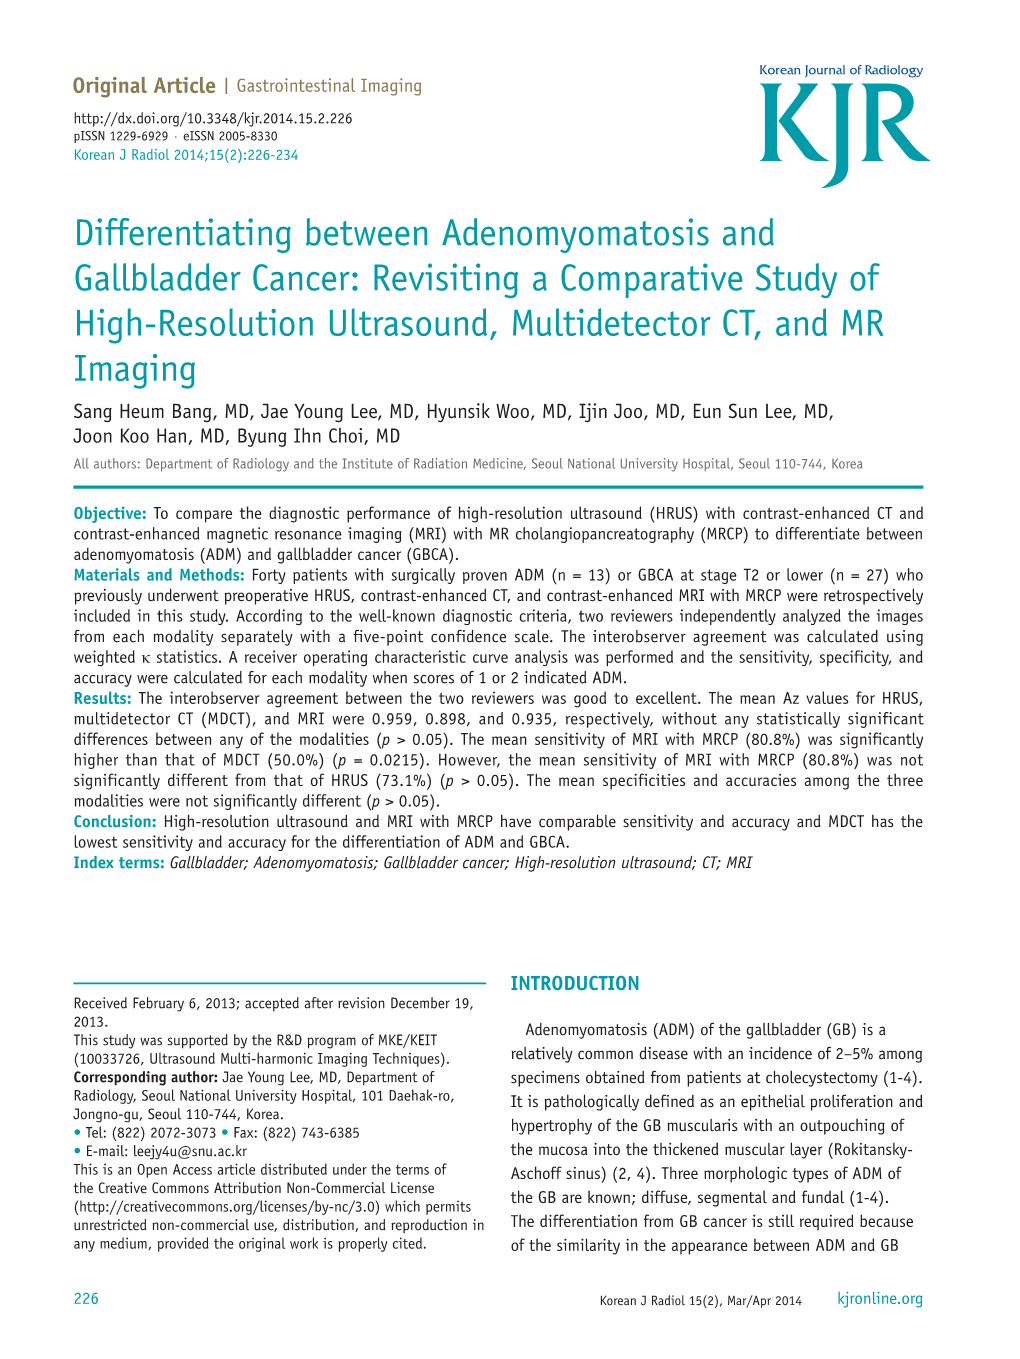 Differentiating Between Adenomyomatosis and Gallbladder